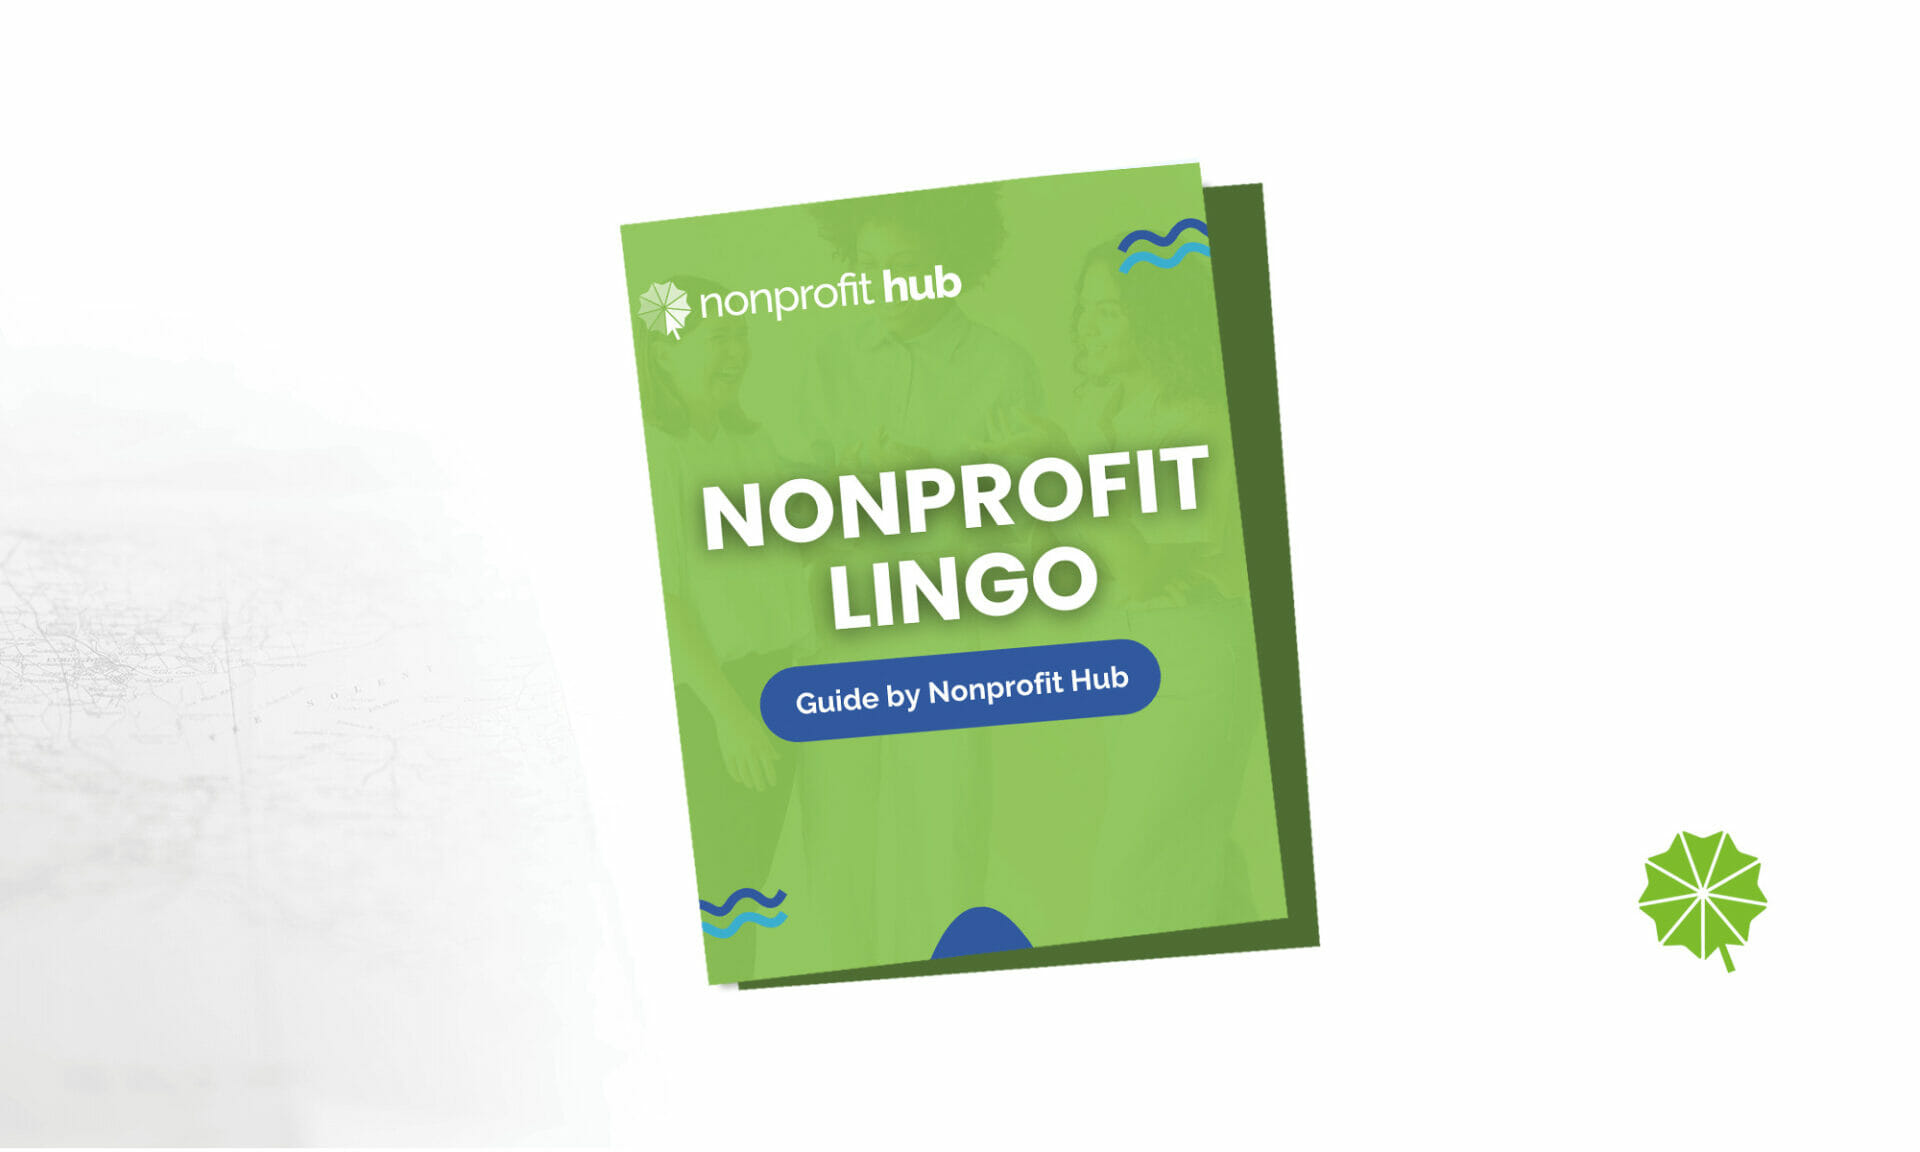 Nonprofit lingo guide image